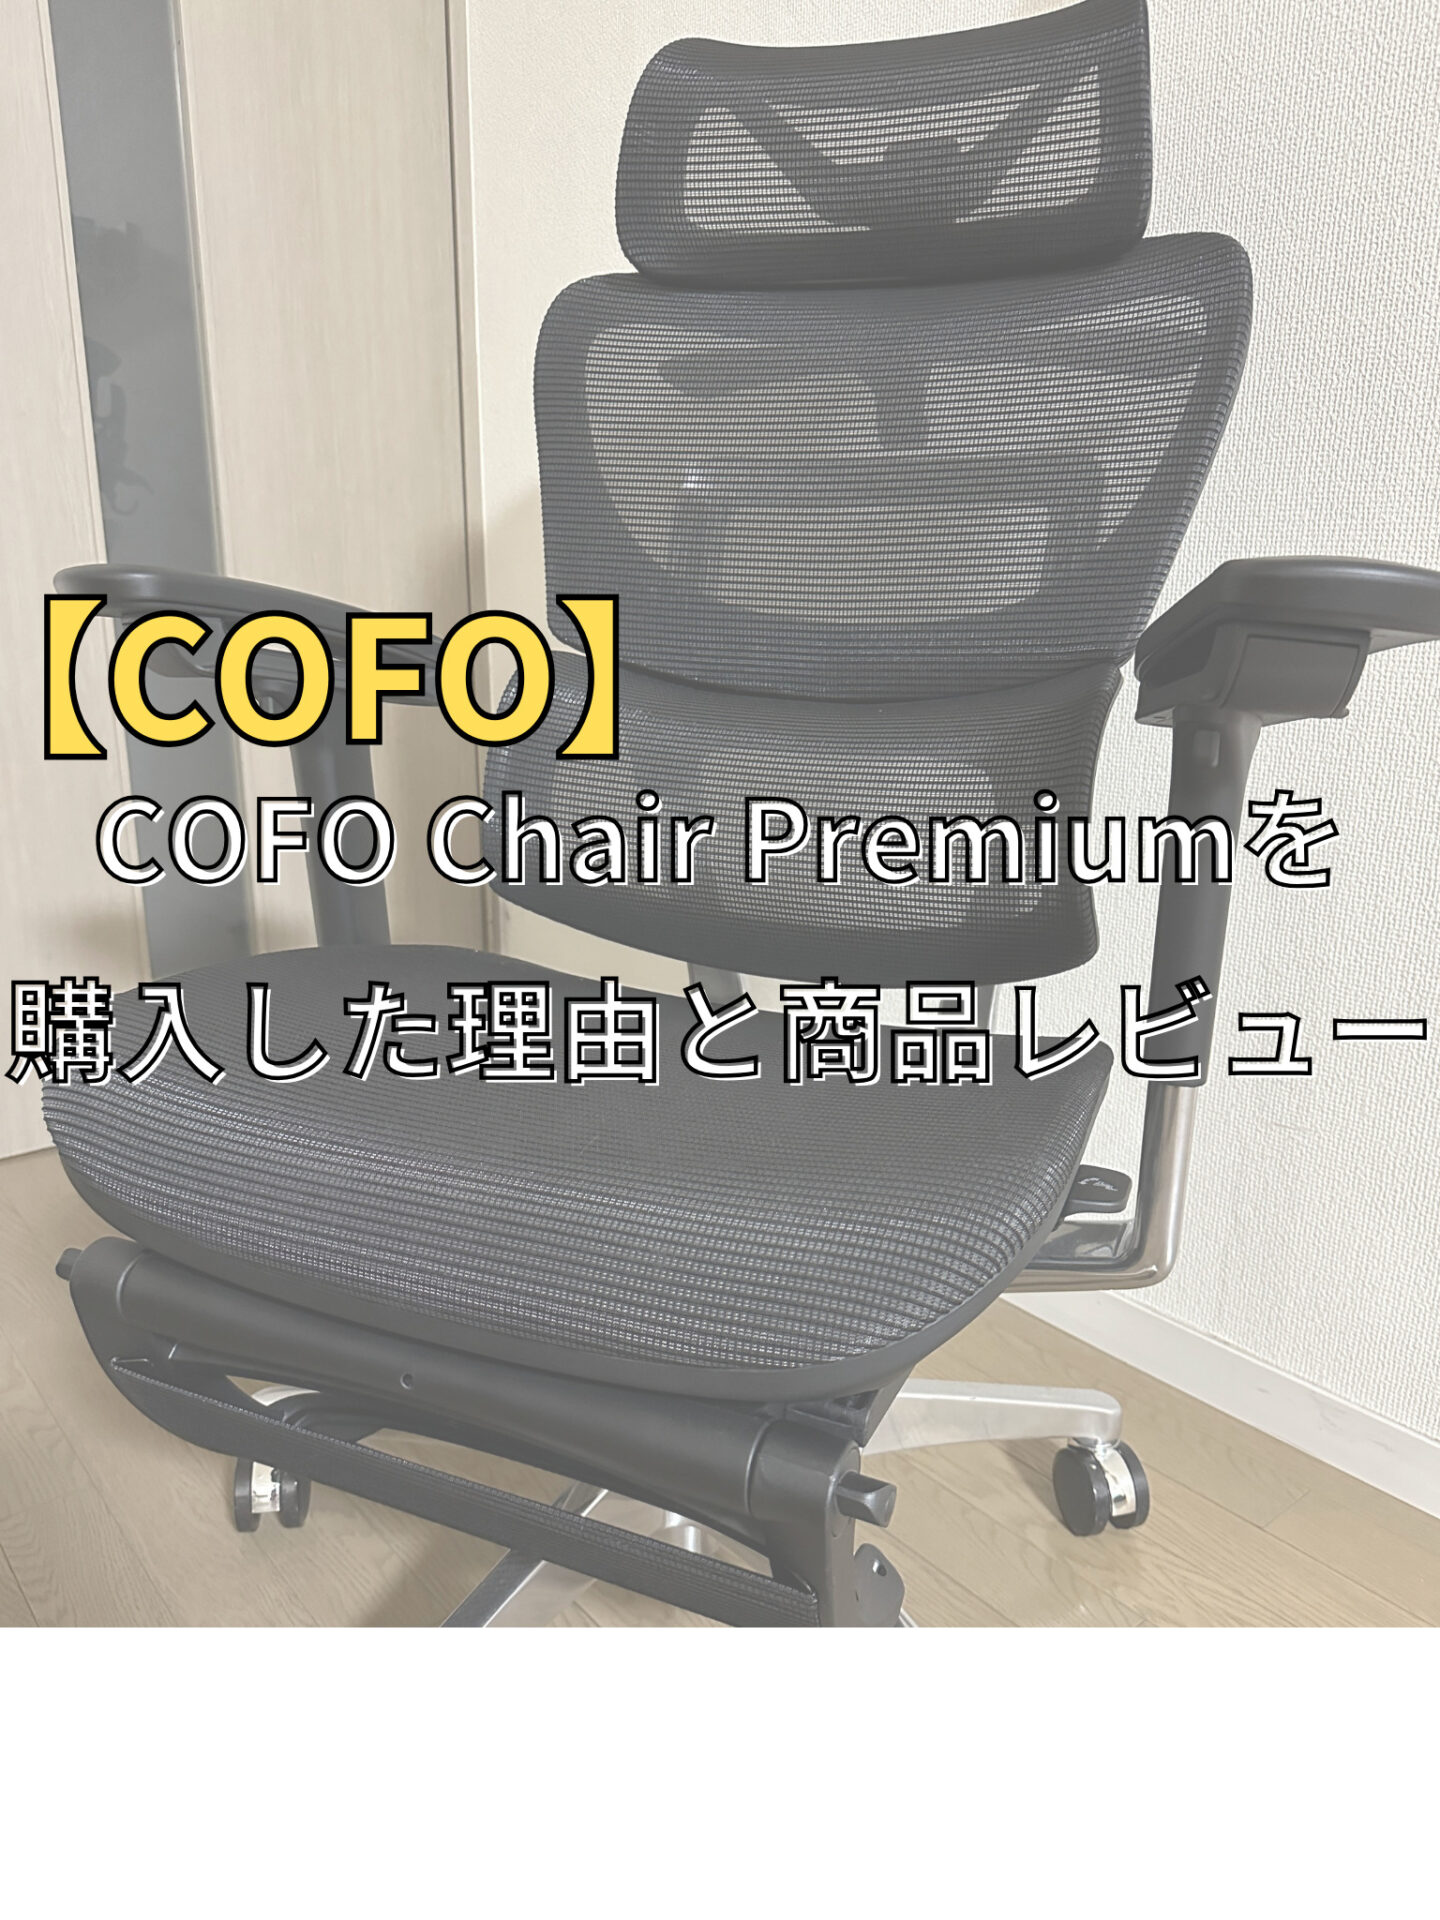 COFO】COFO Chair Premiumを購入した理由と商品レビュー